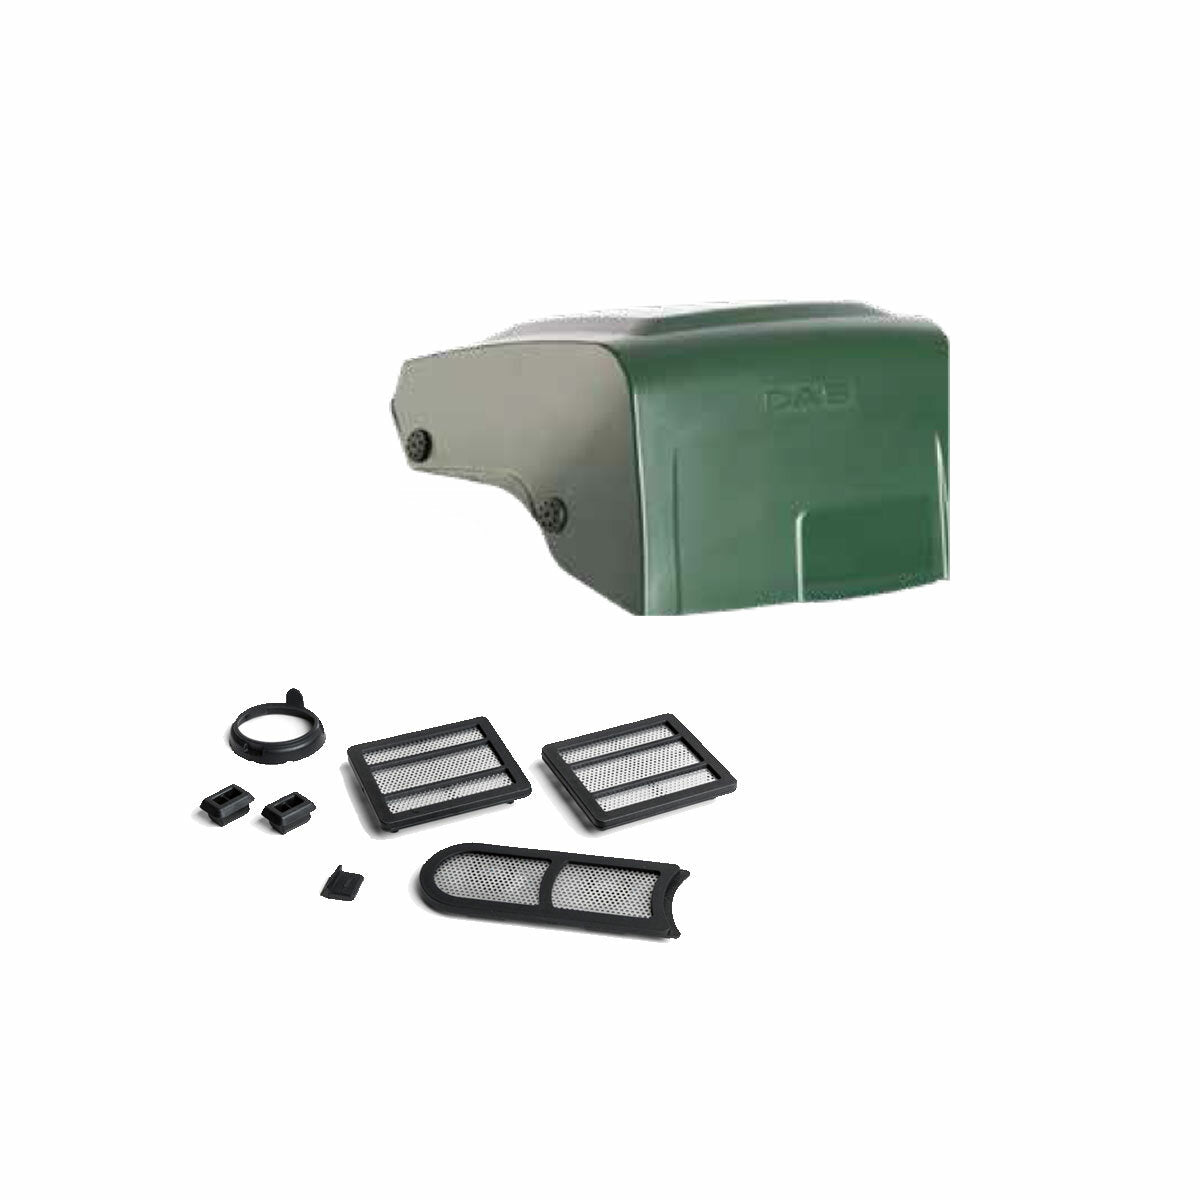 ESycover + Esygrid DAB Outdoor-Kit für Esybox mini3 grün